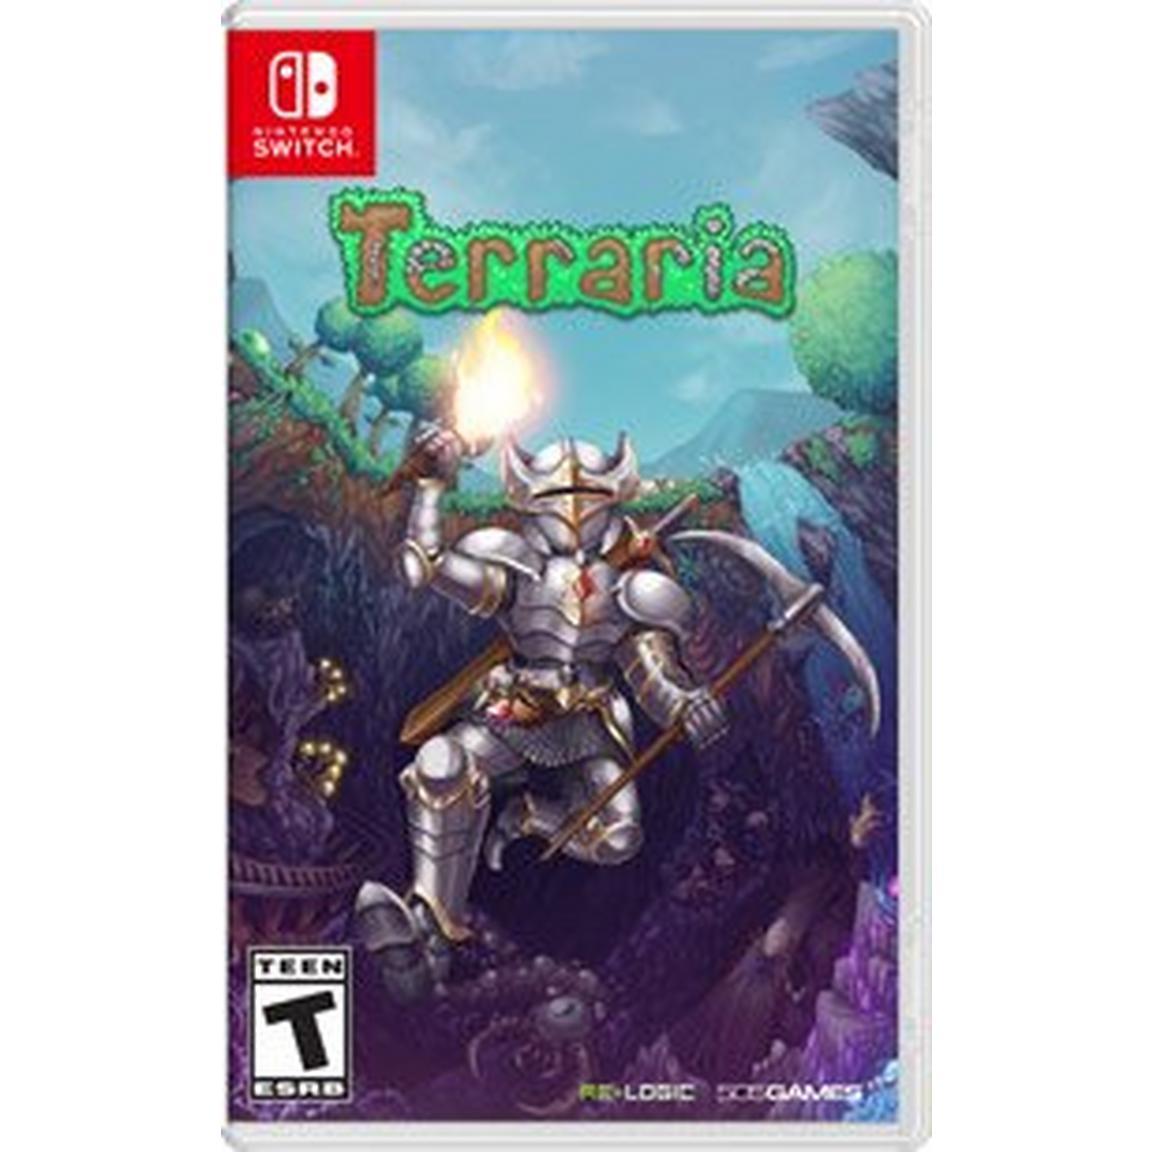 Terraria Nintendo Switch for $14.99